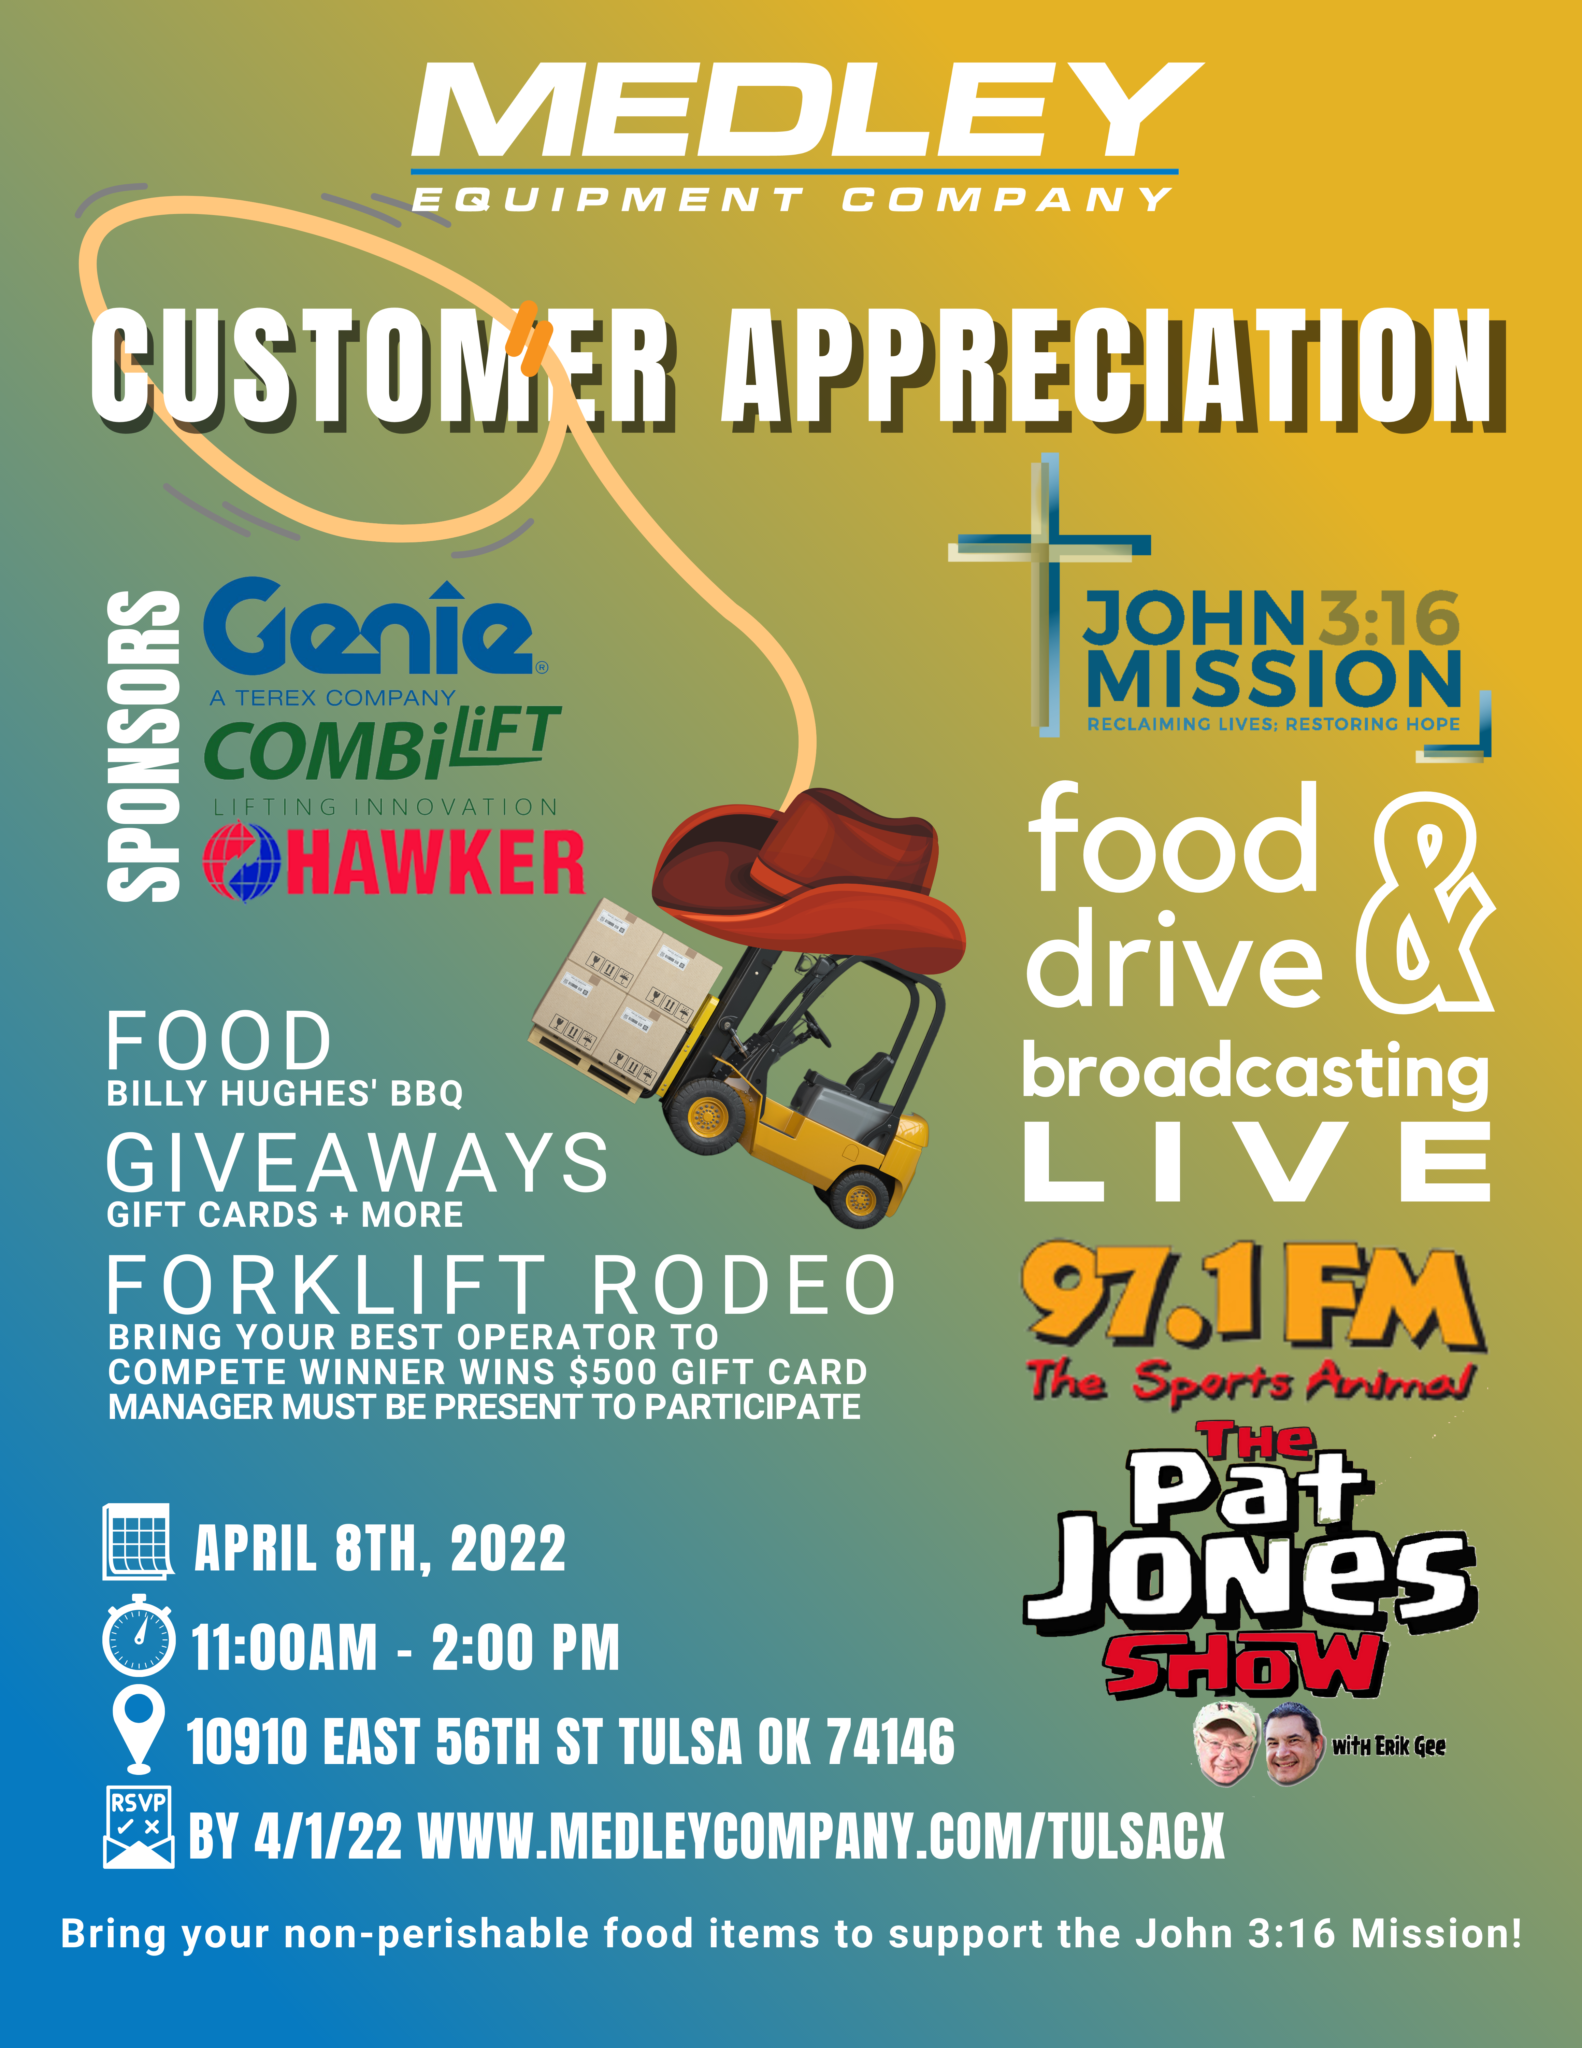 Customer Appreciation + Forklift Rodeo | Medley Equipment Company